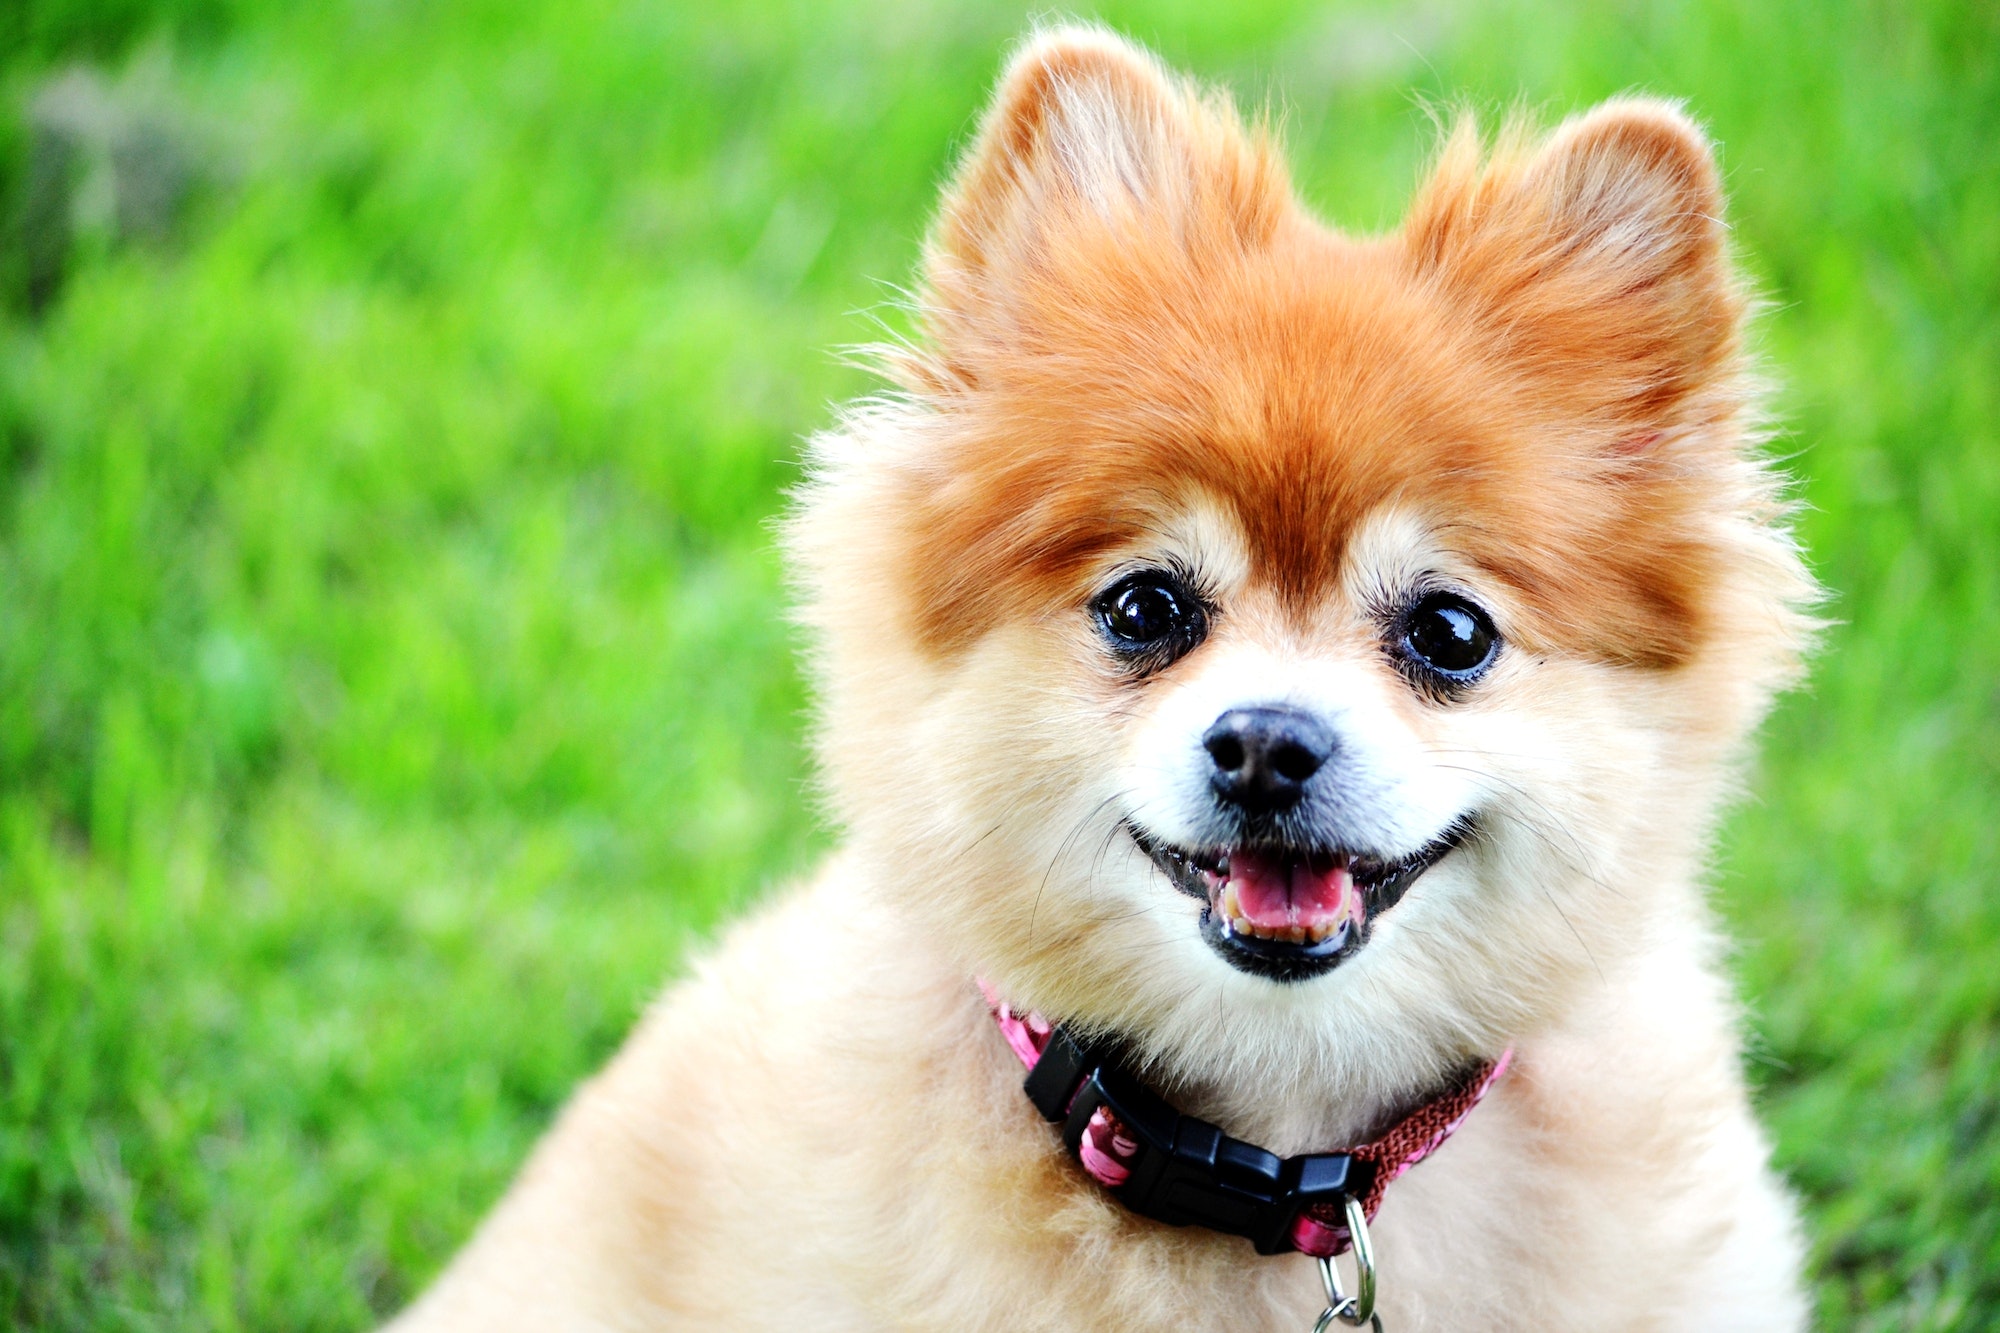 Adorable smiling dog